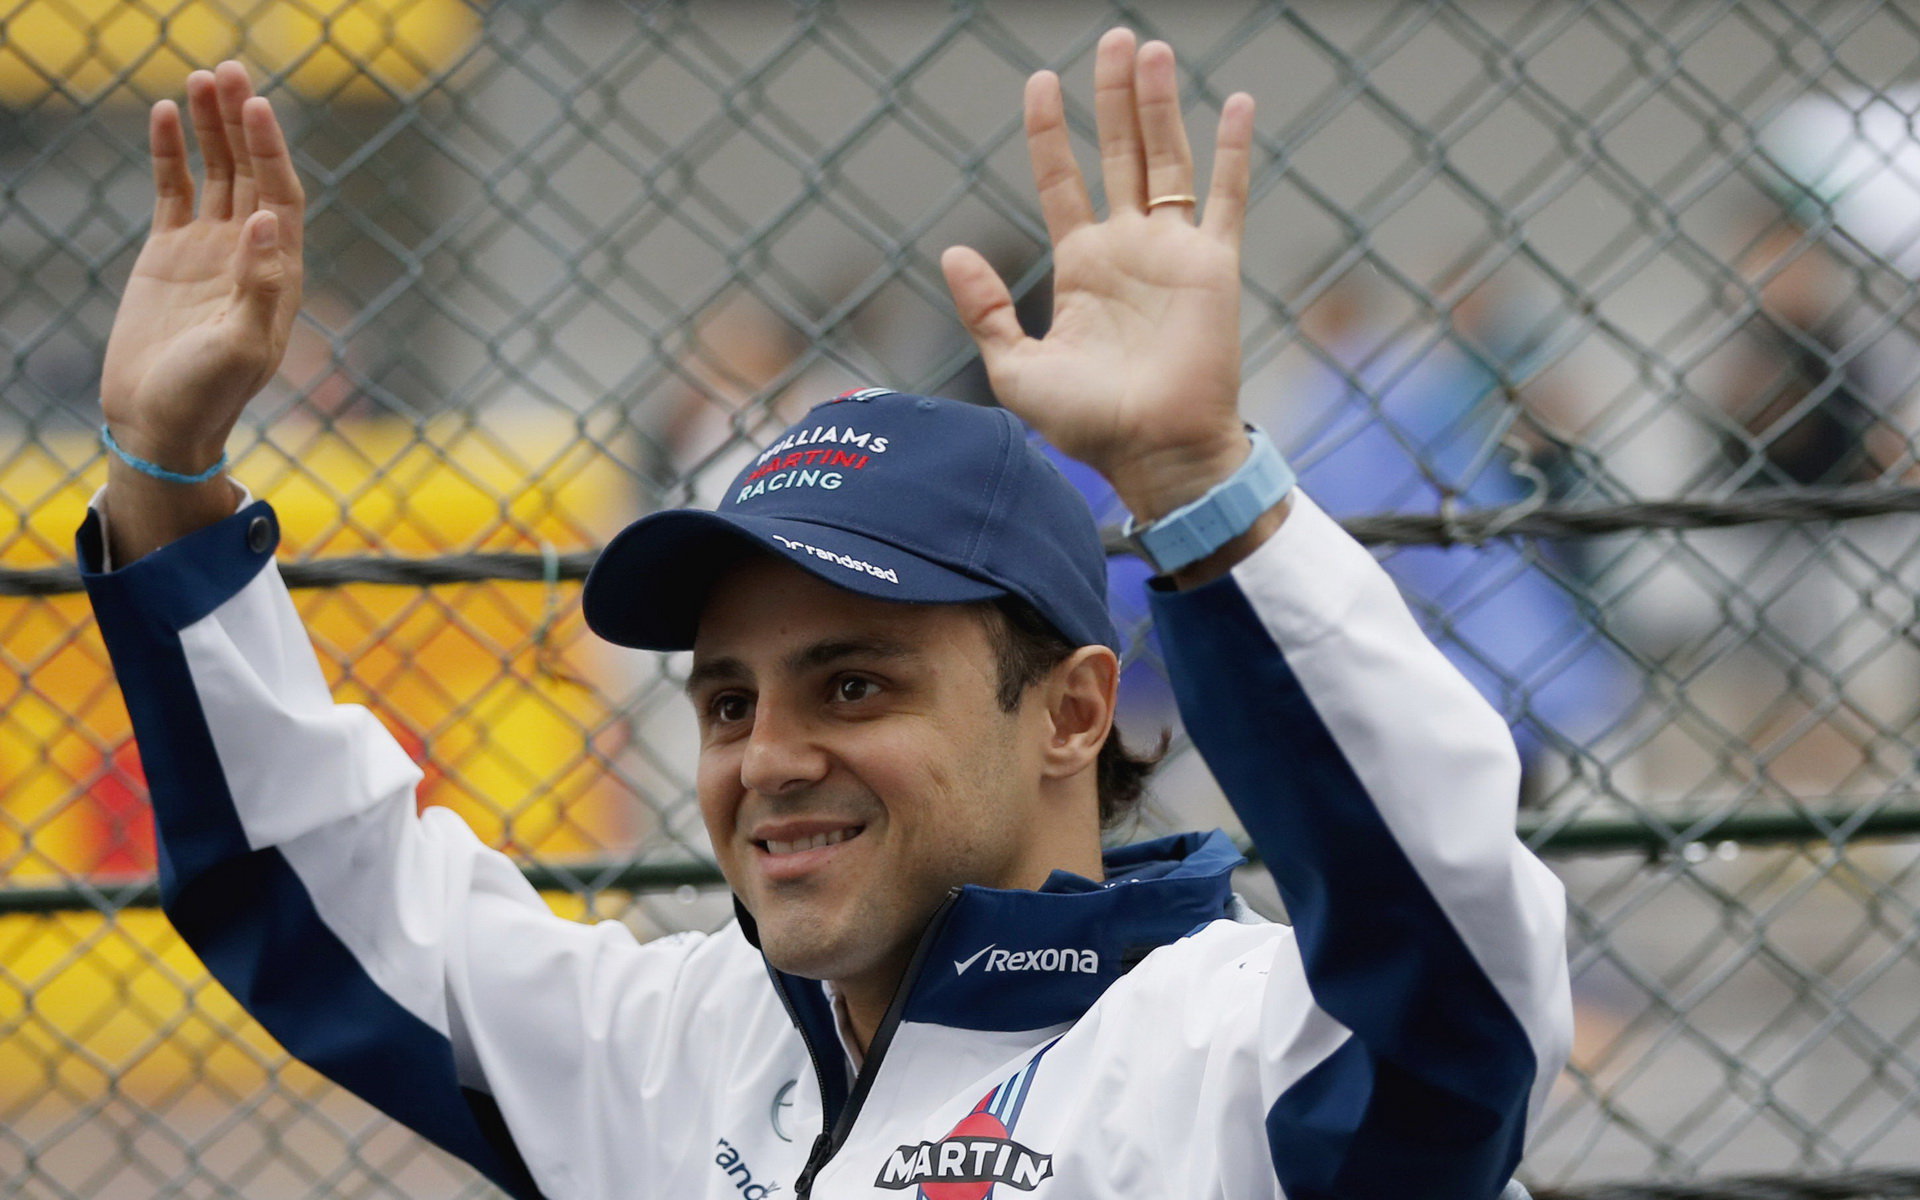 Felipe Massa, GP Japonska (Suzuka)